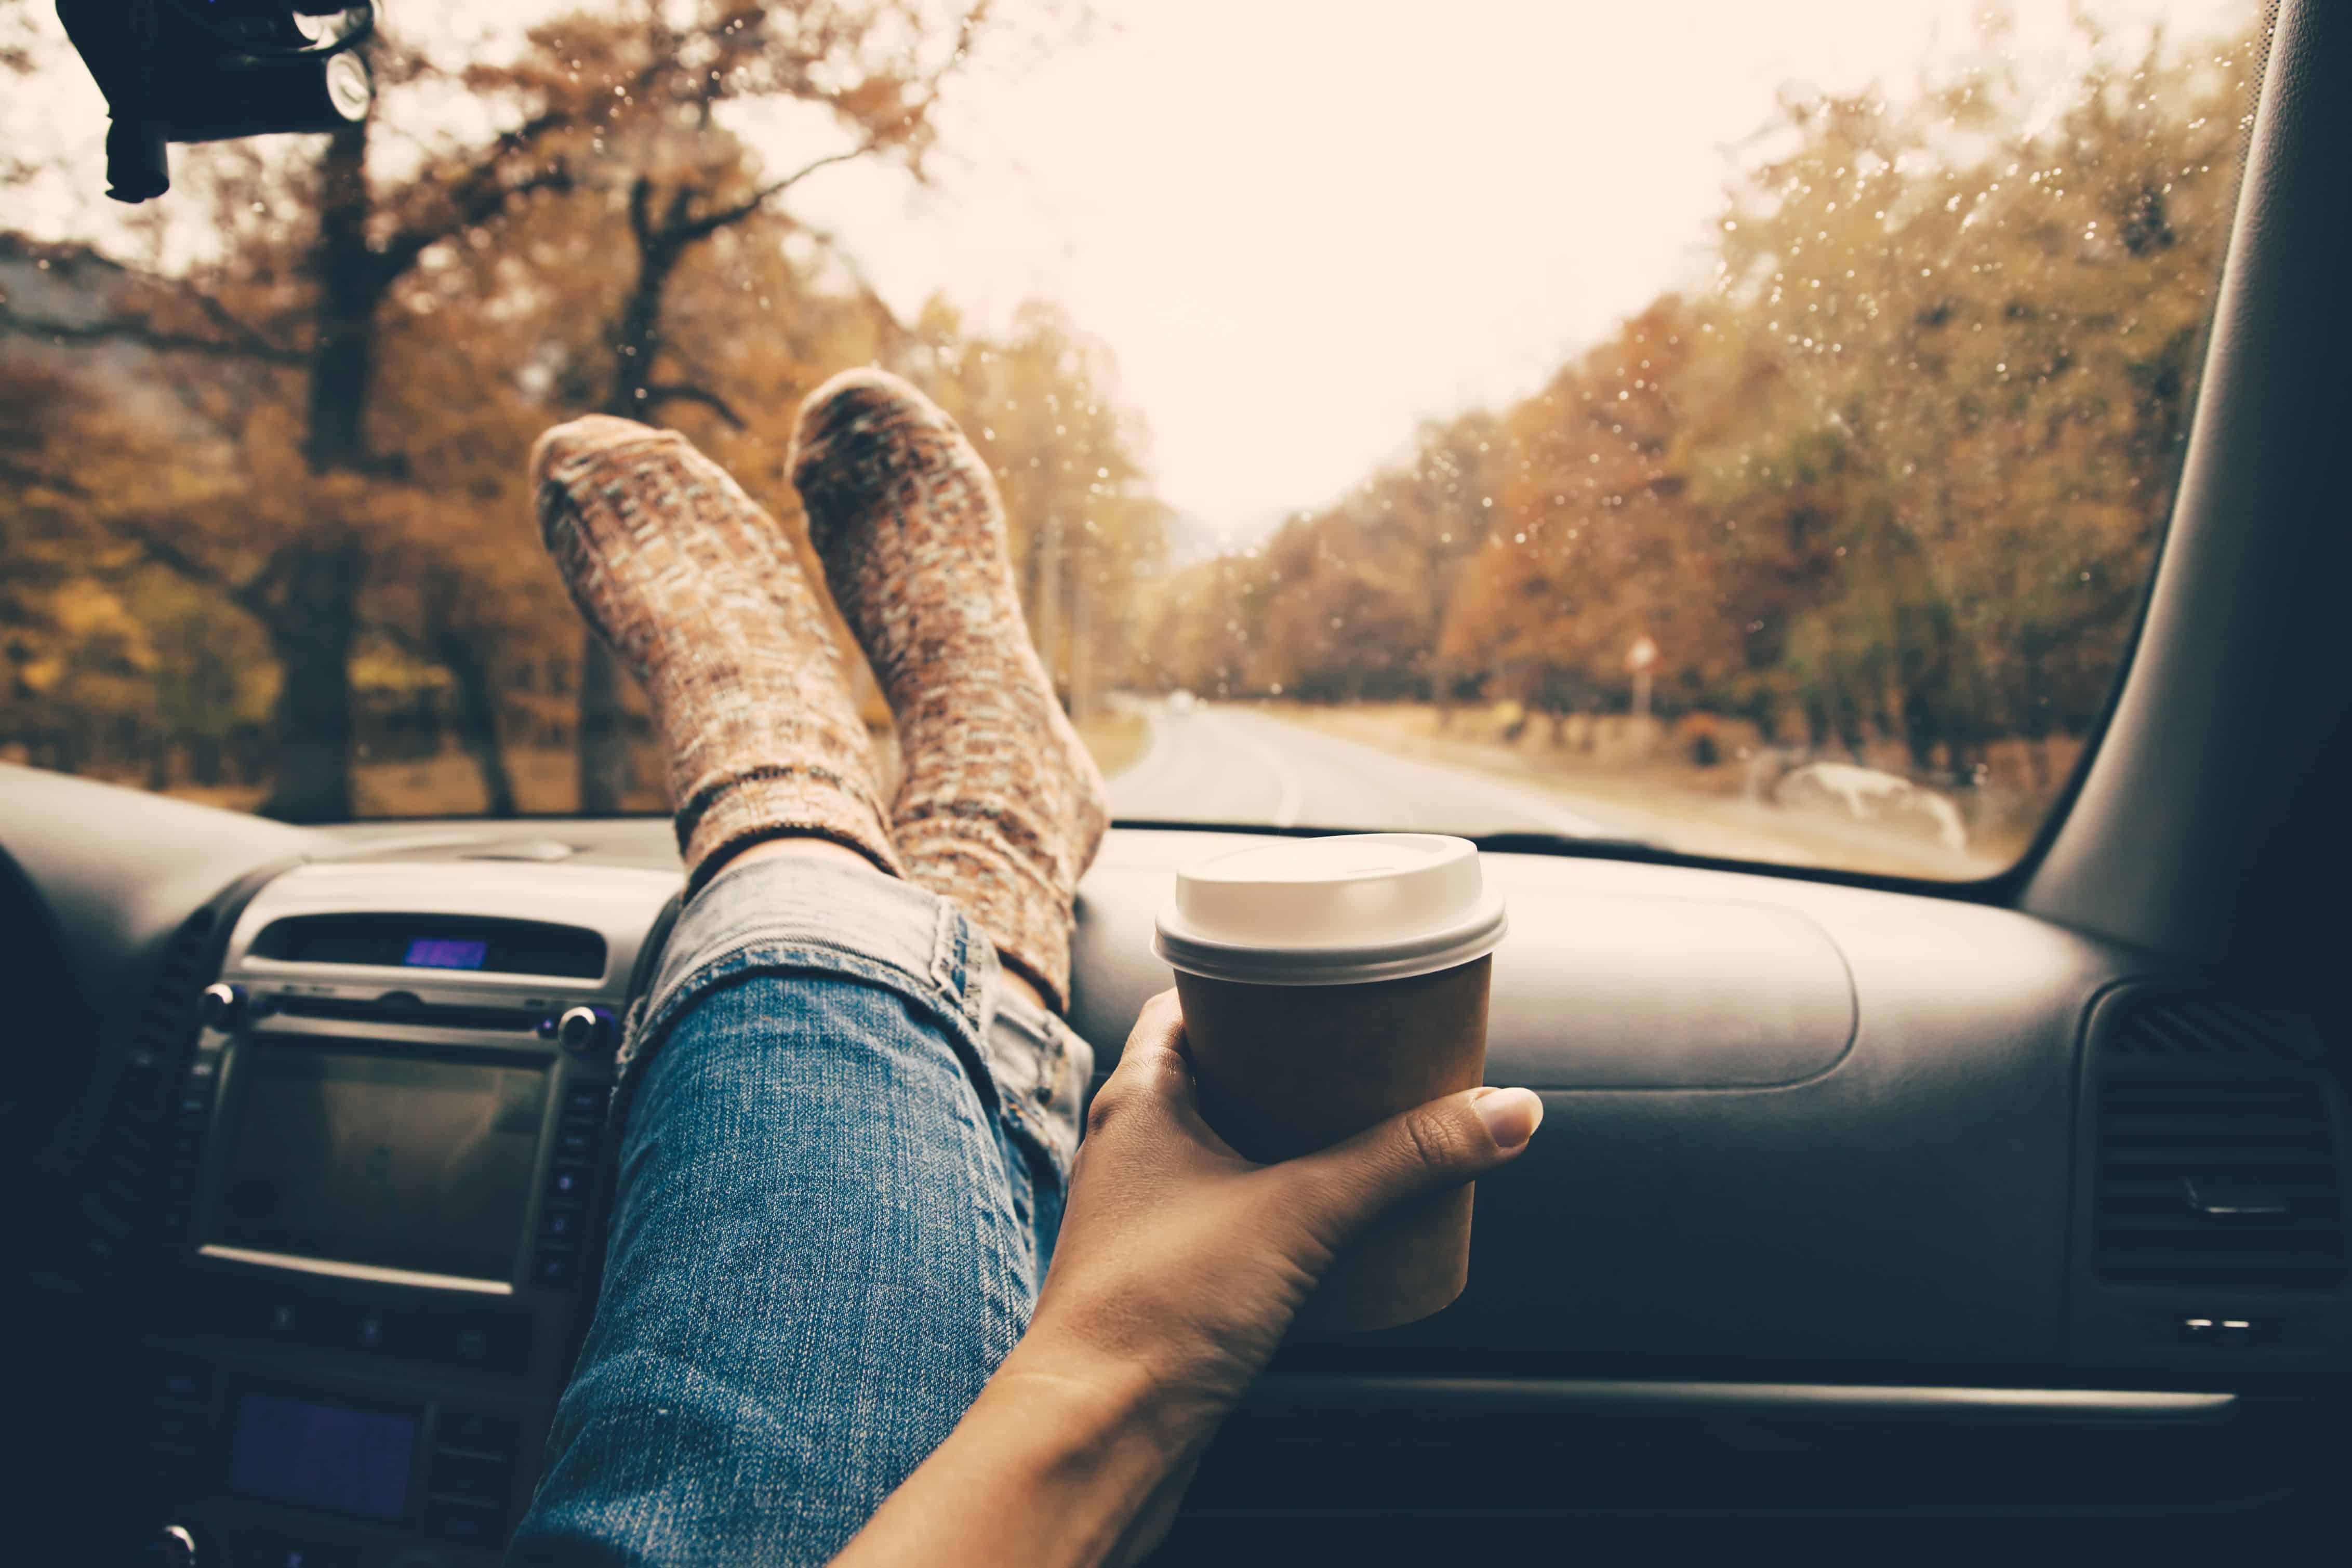 Woman feet in warm socks on car dashboard. Drinking take away coffee on road. Fall trip. Rain drops on windshield. Freedom travel concept. Autumn weekend.